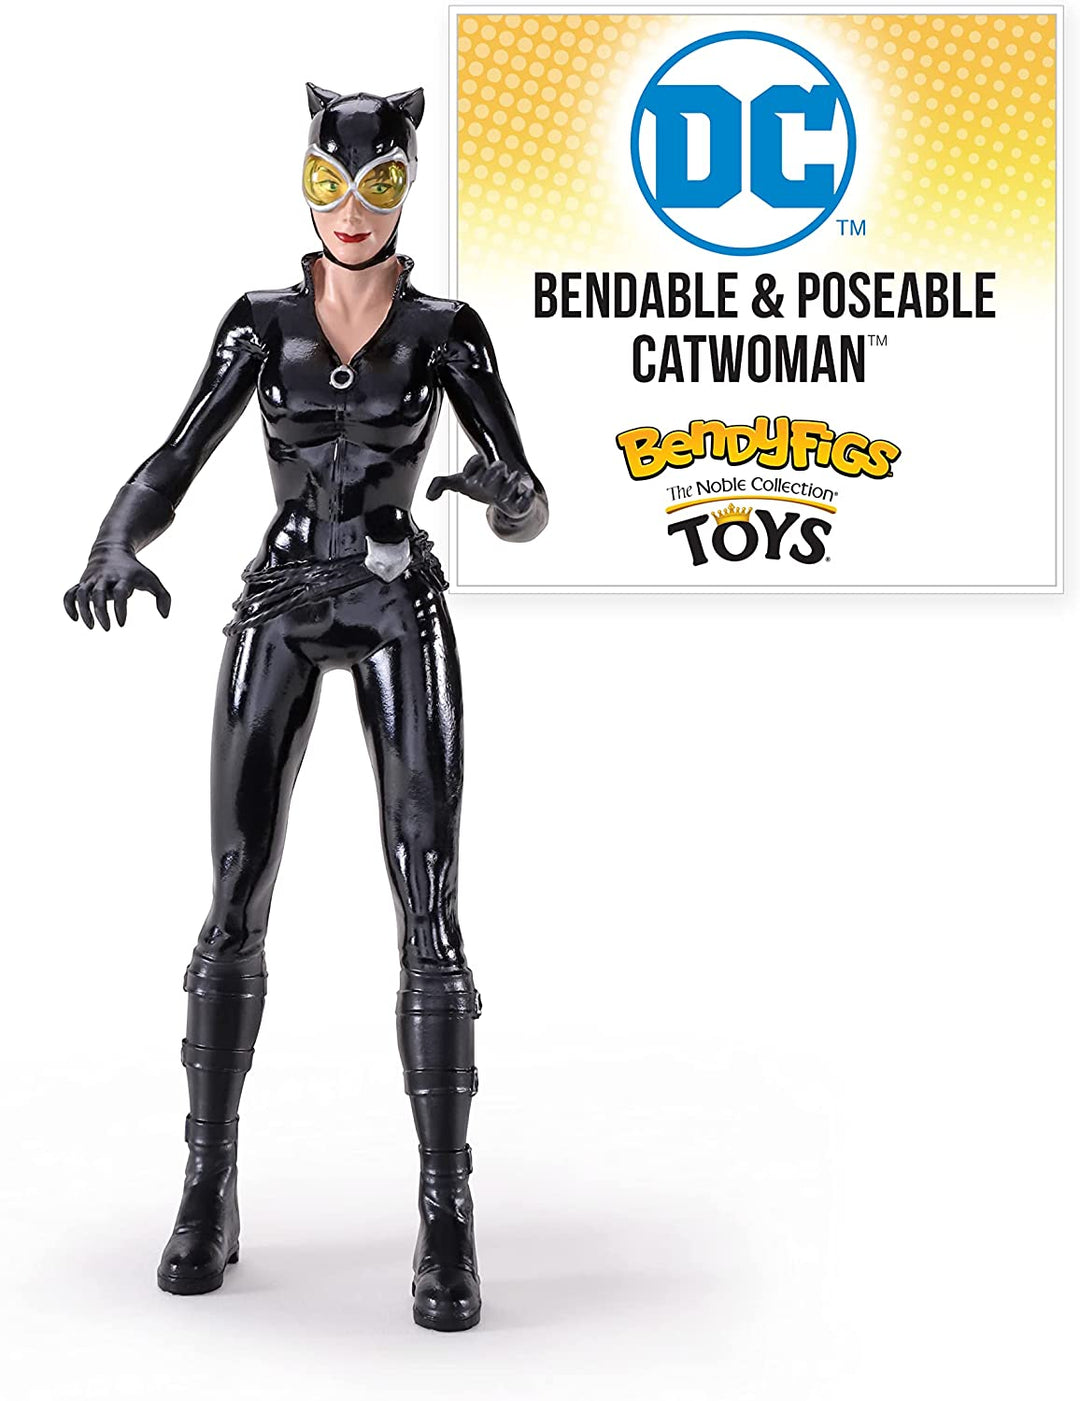 DC Comics Bendyfigs Catwoman 7,5" Bendyfigs